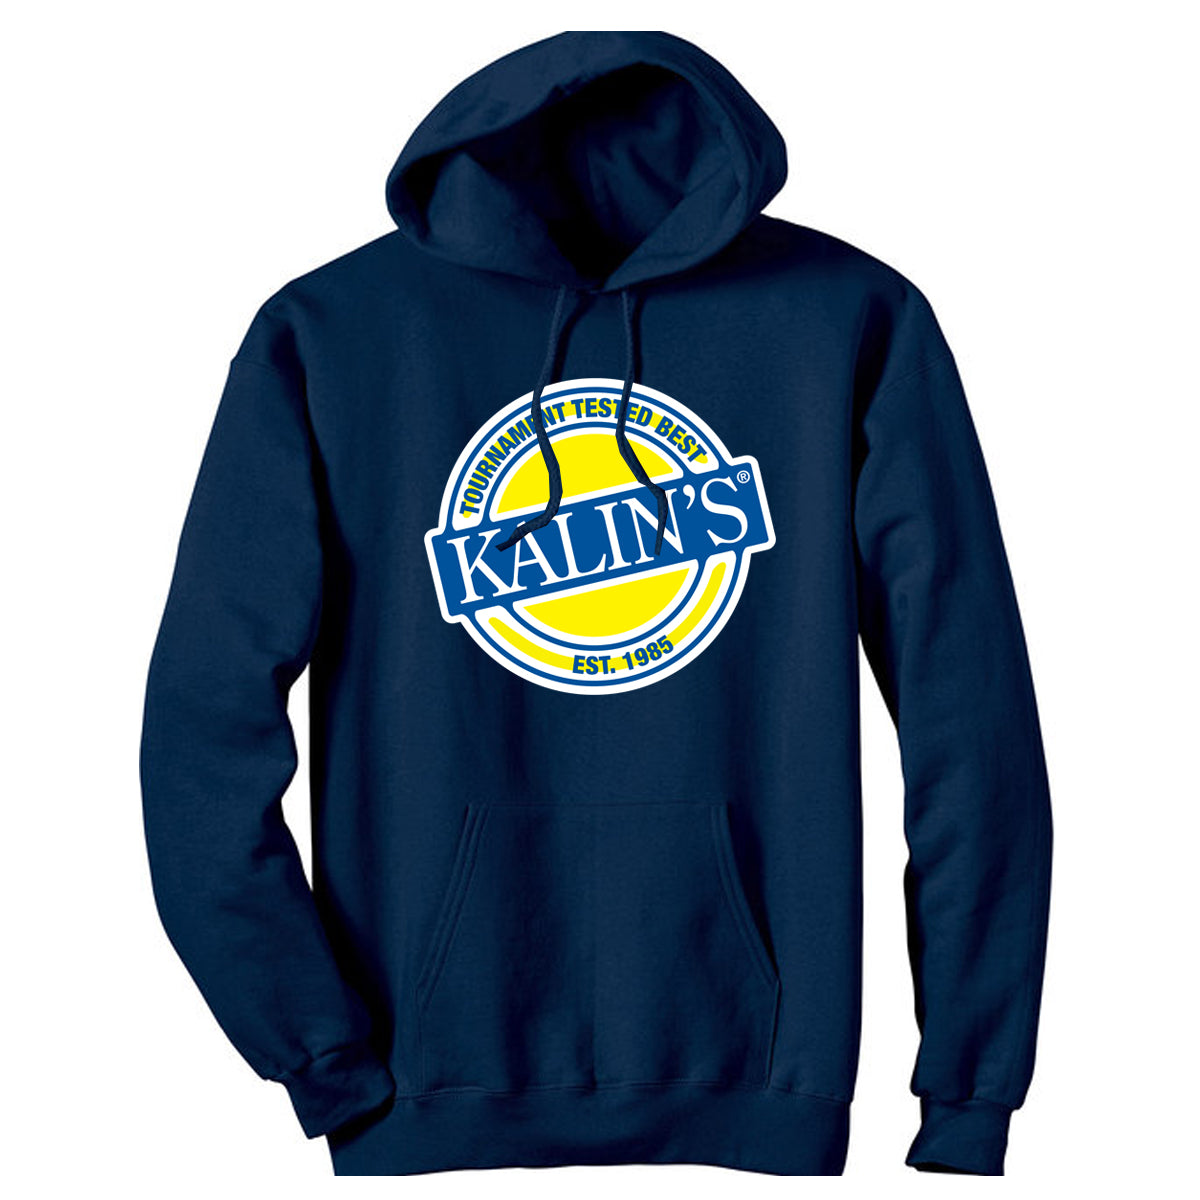 Kalin's Navy Blue Hooded Sweatshirt